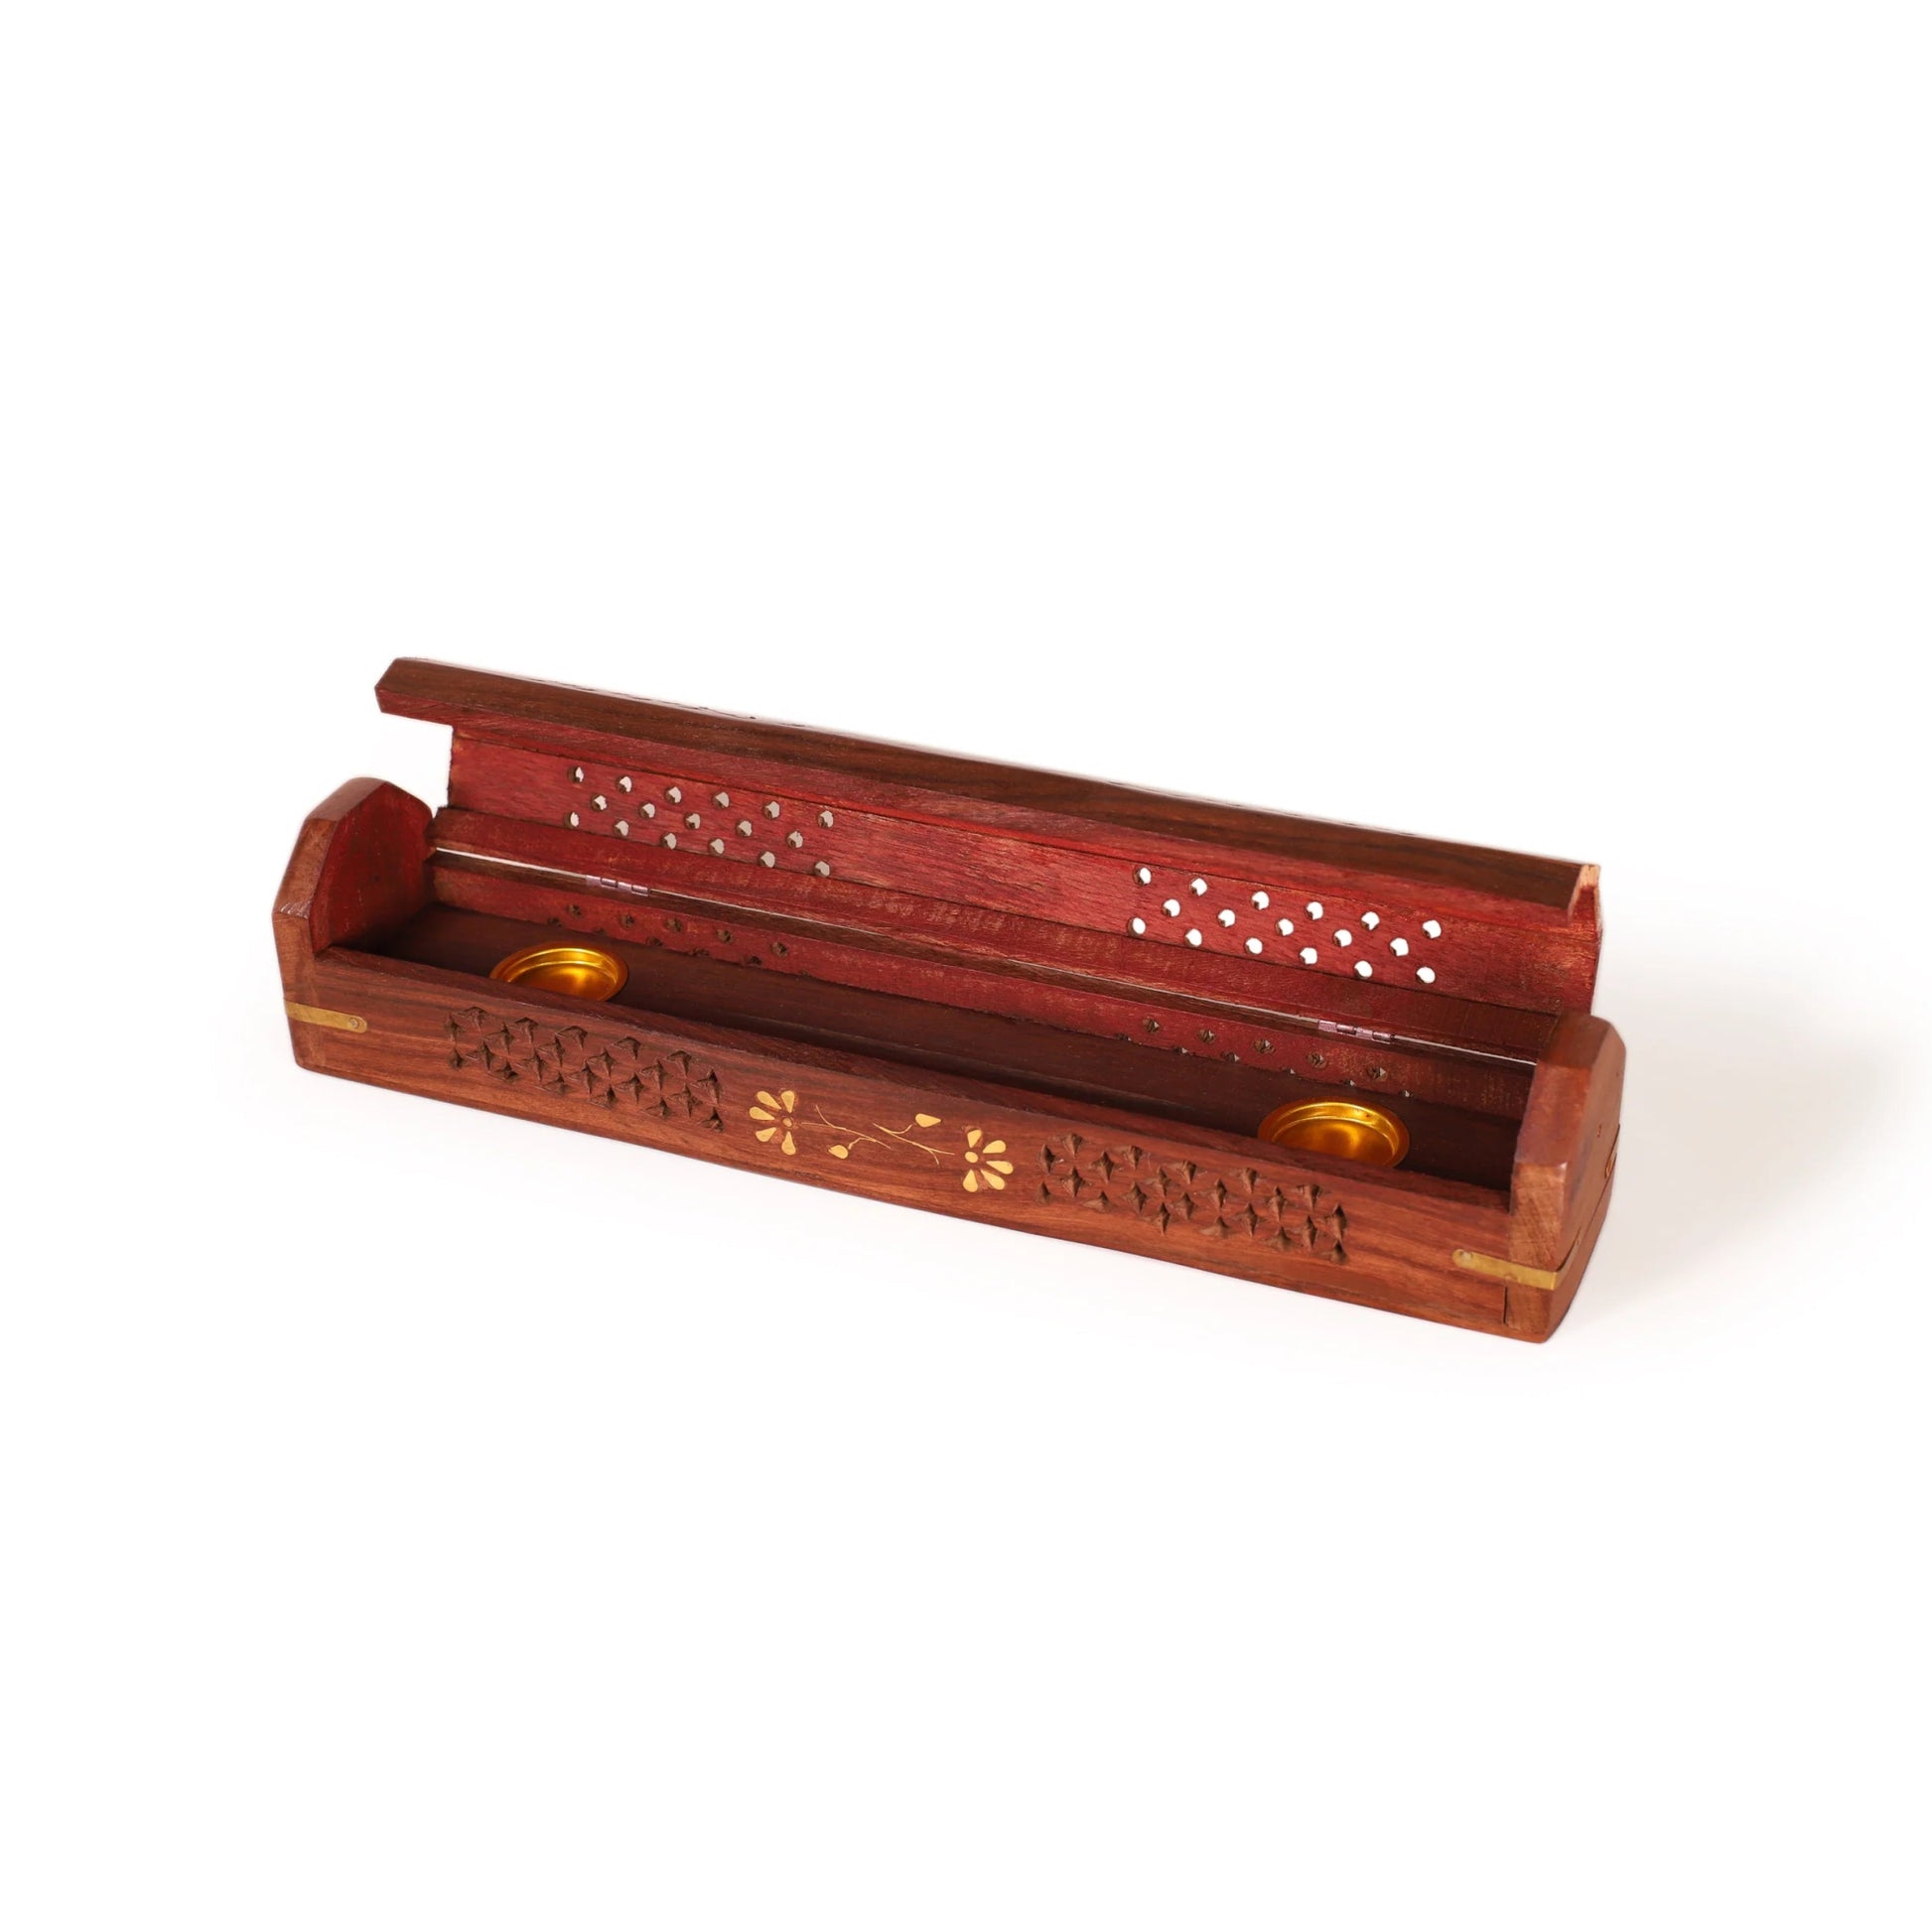 Incense Burner - Wooden Box with Storage - 5 Panel Jali & Flowers - Tree Spirit Wellness